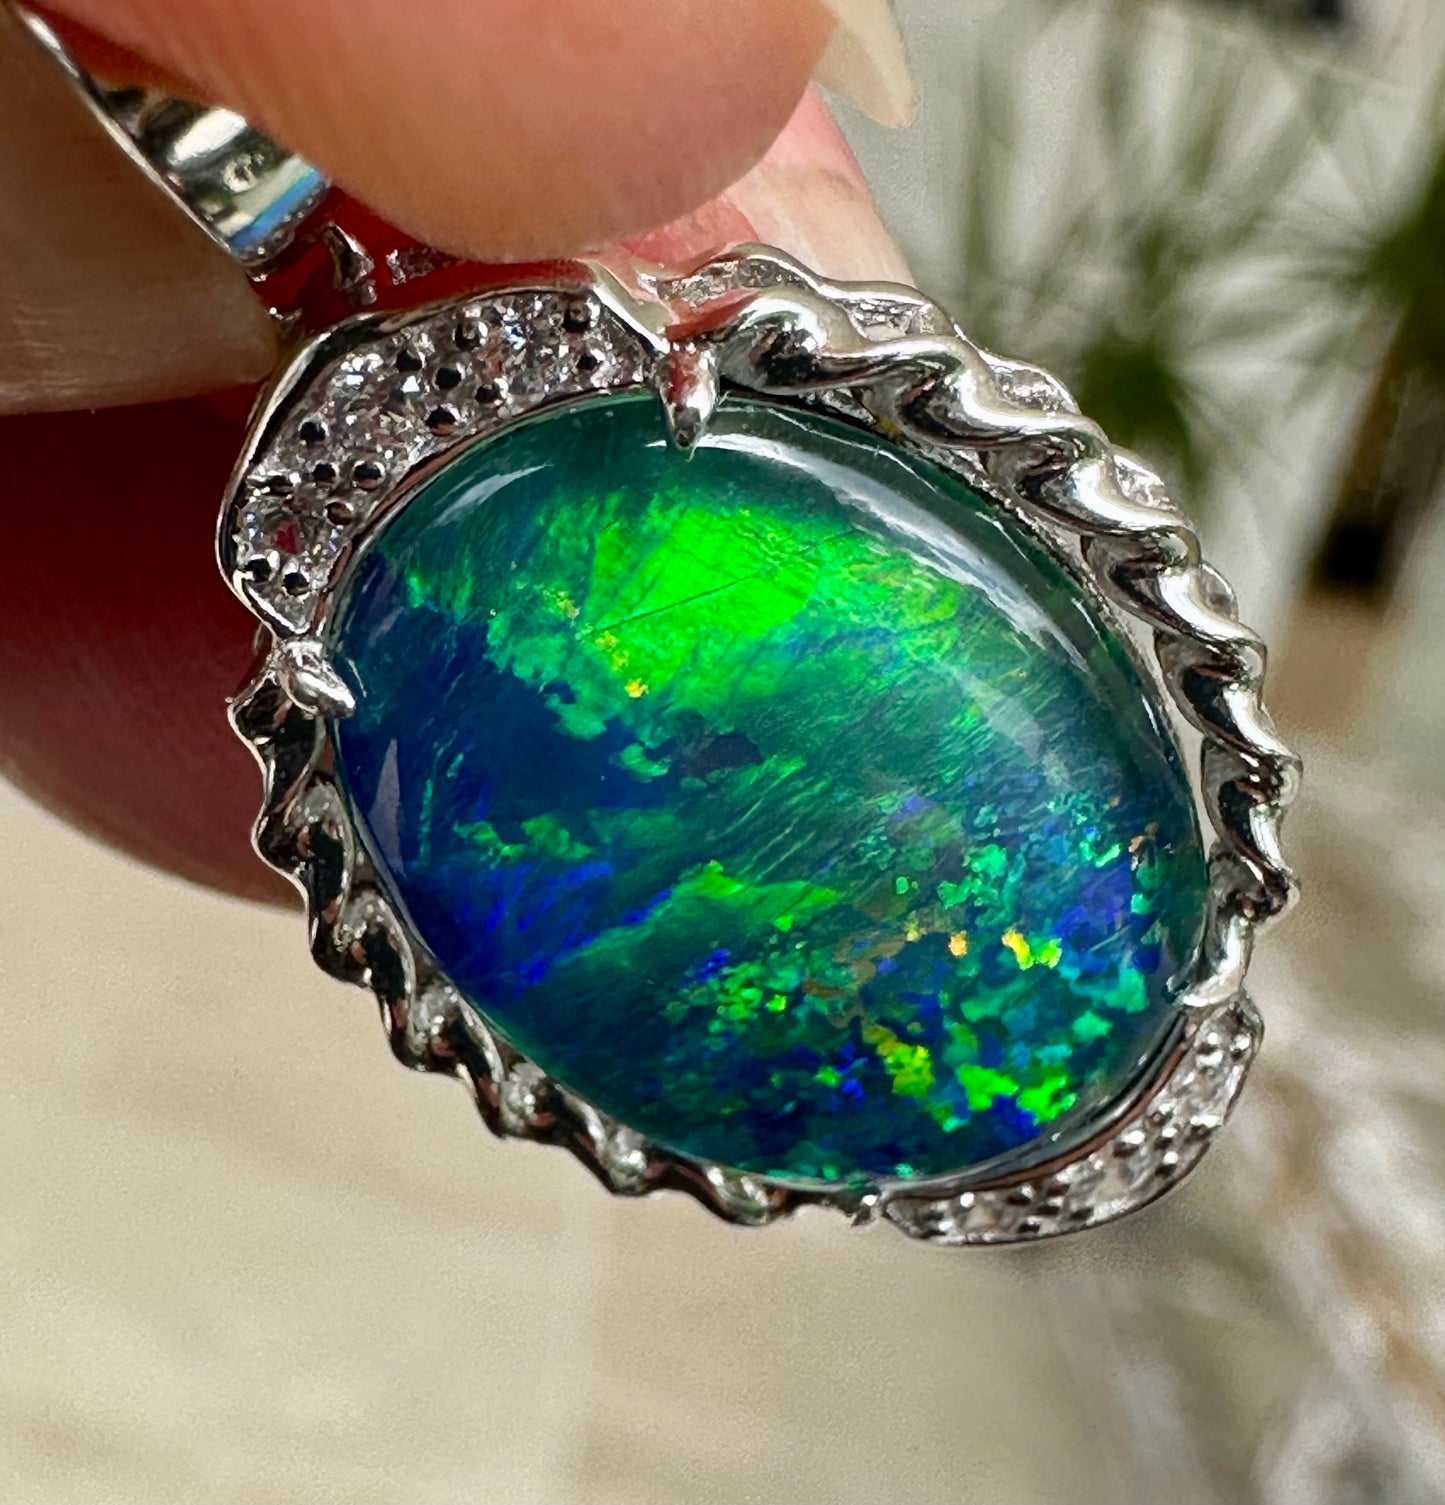 Brilliant flashing Australian Opal Pendant.